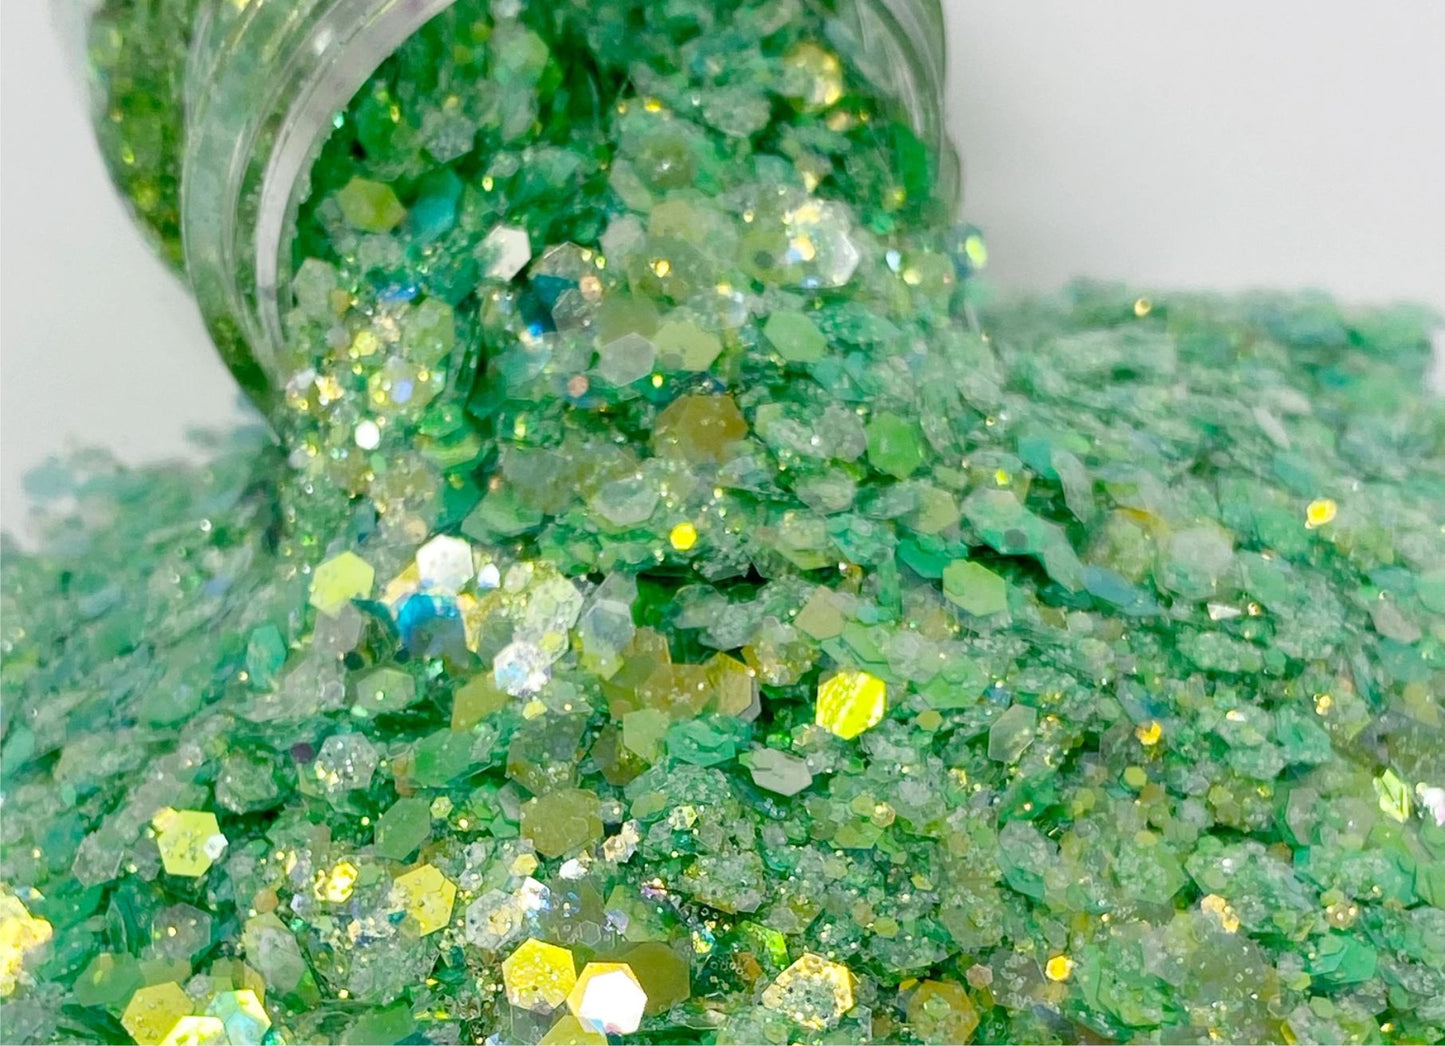 Irish Spring Mixology Glitter